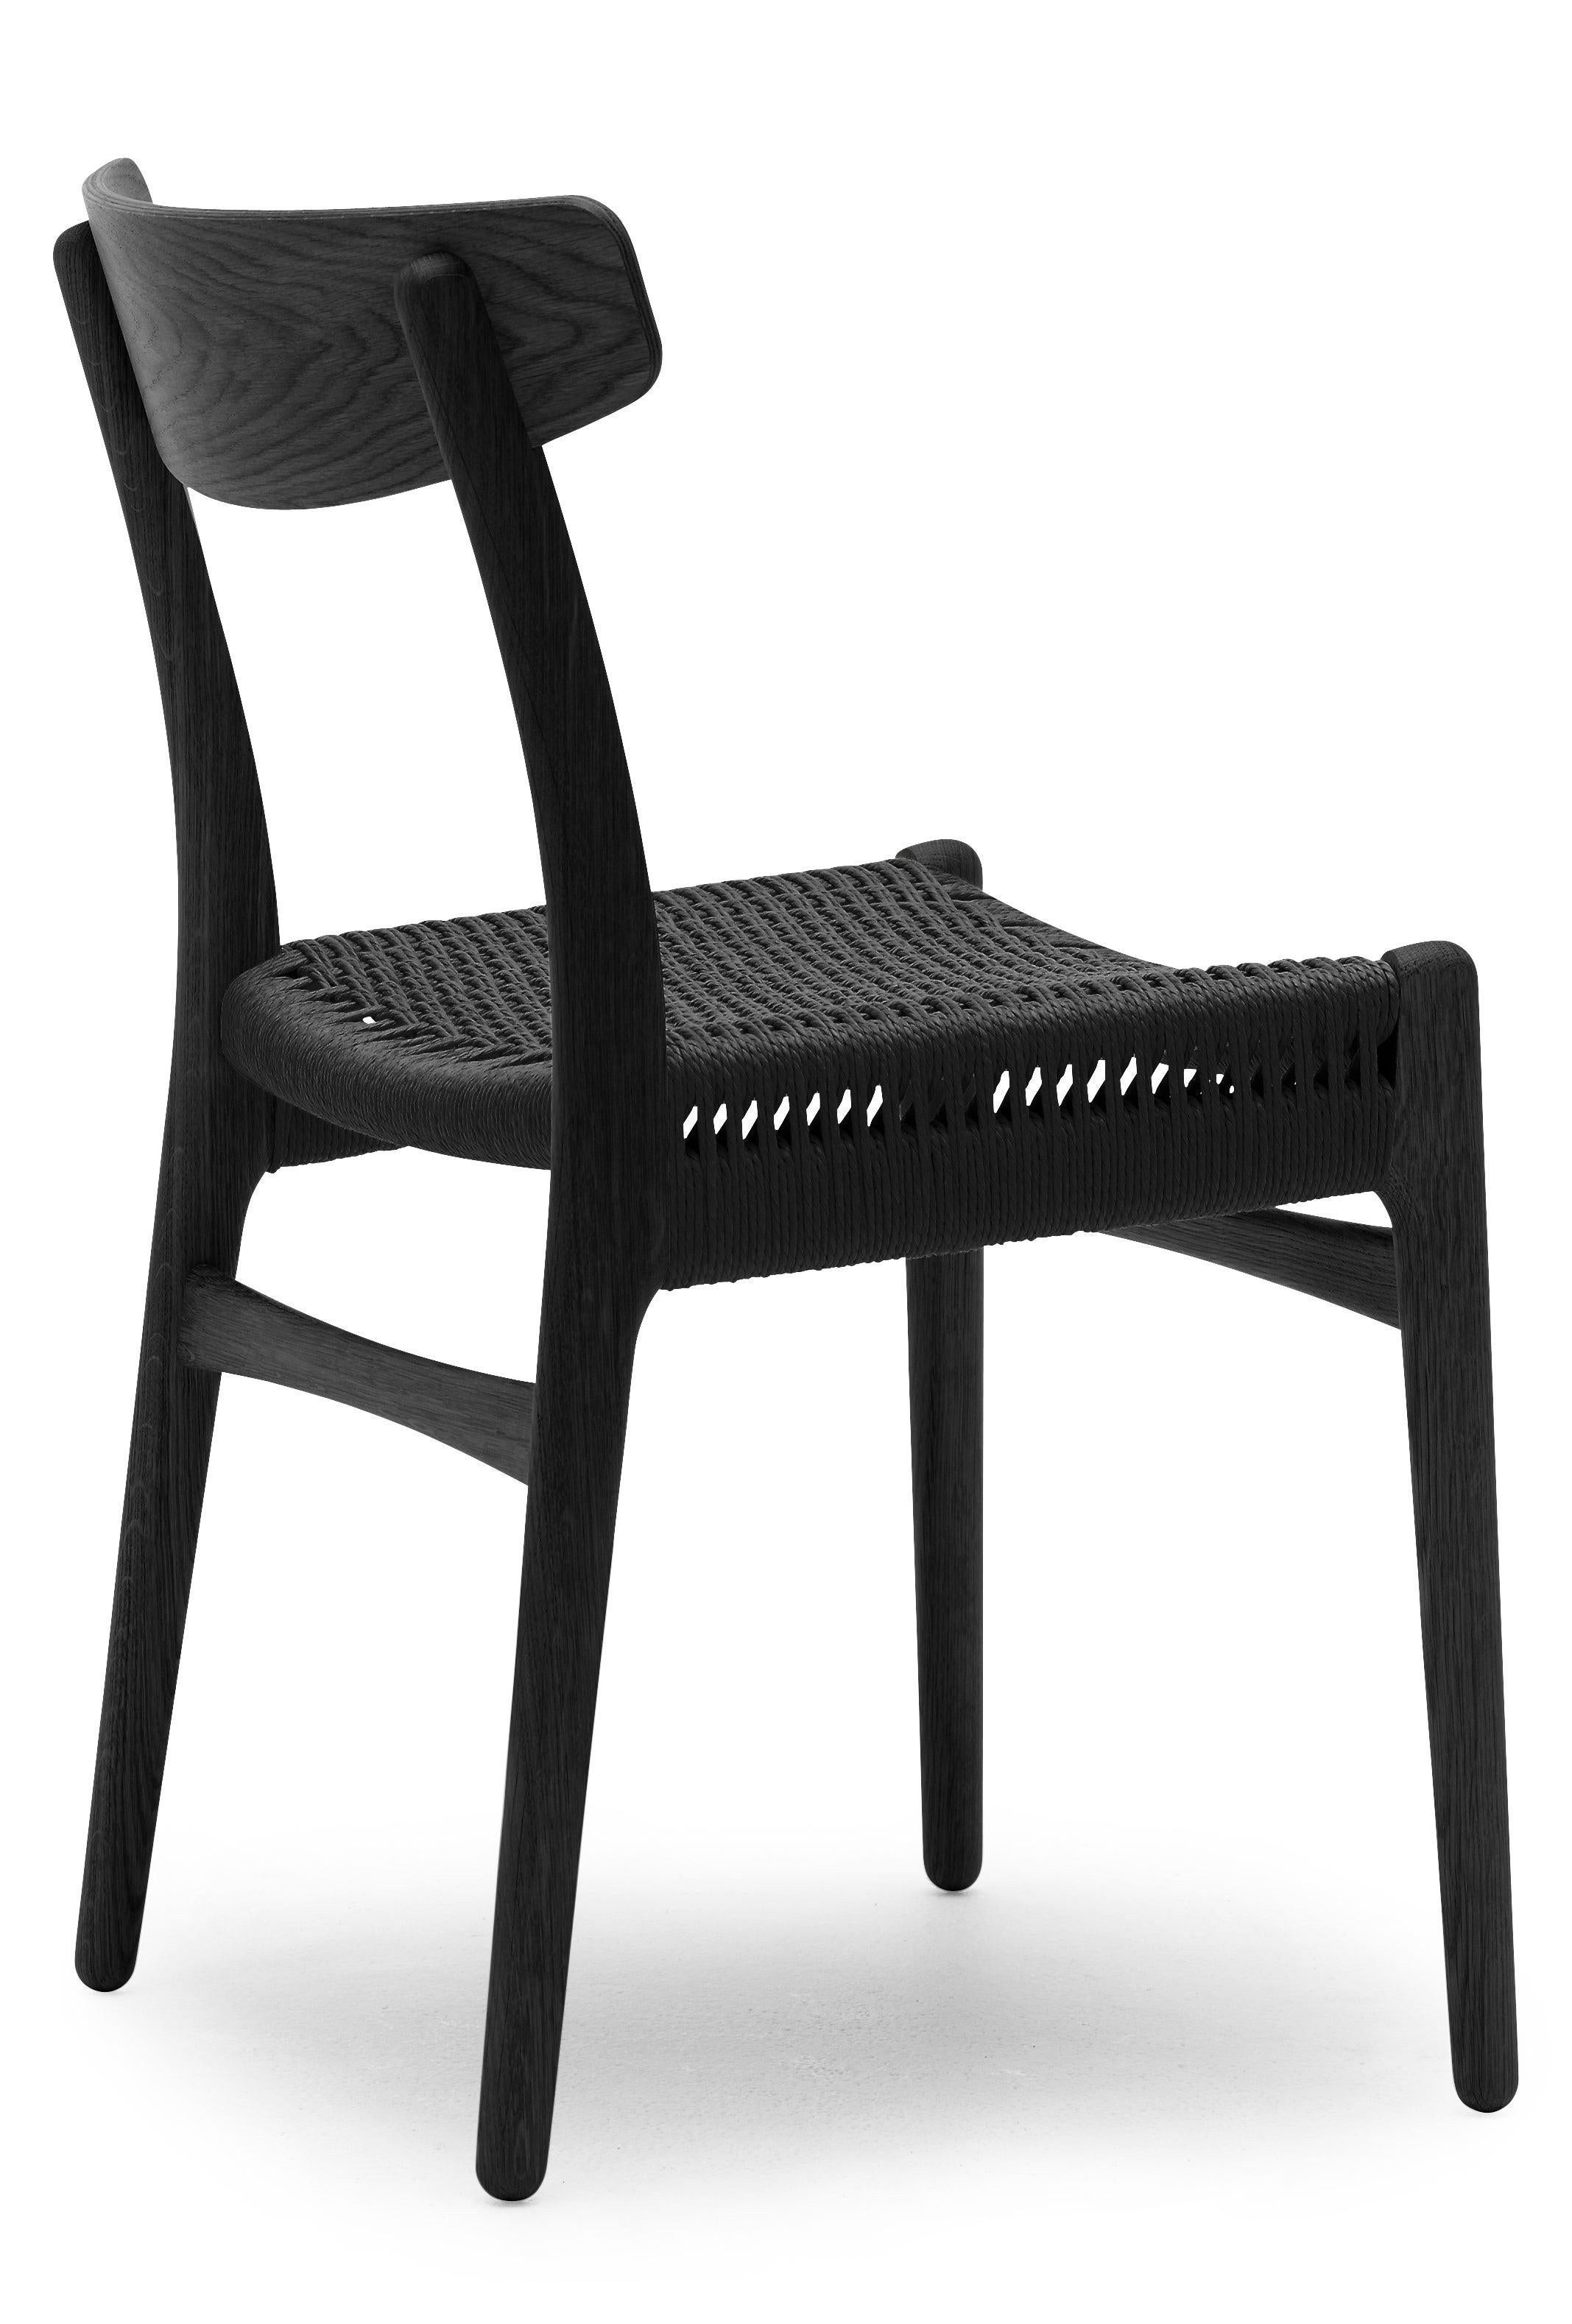 Modern CH23 Dining Chair in Oak Painted Black & Black Papercord Seat by Hans J. Wegner